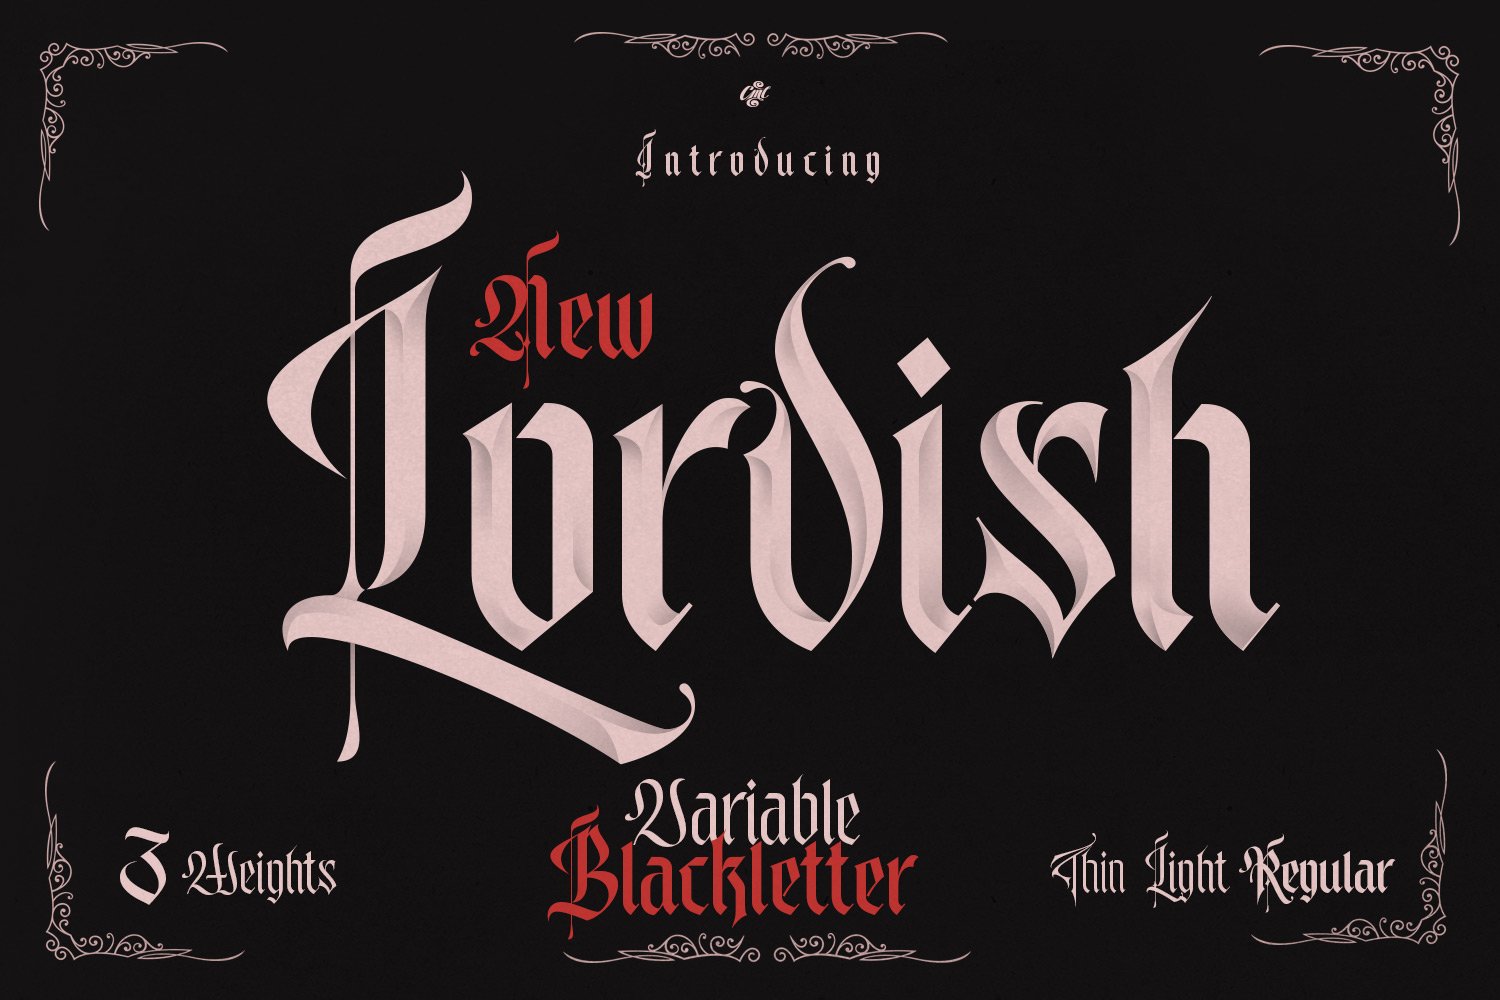 Lordish Blackletter cover image.